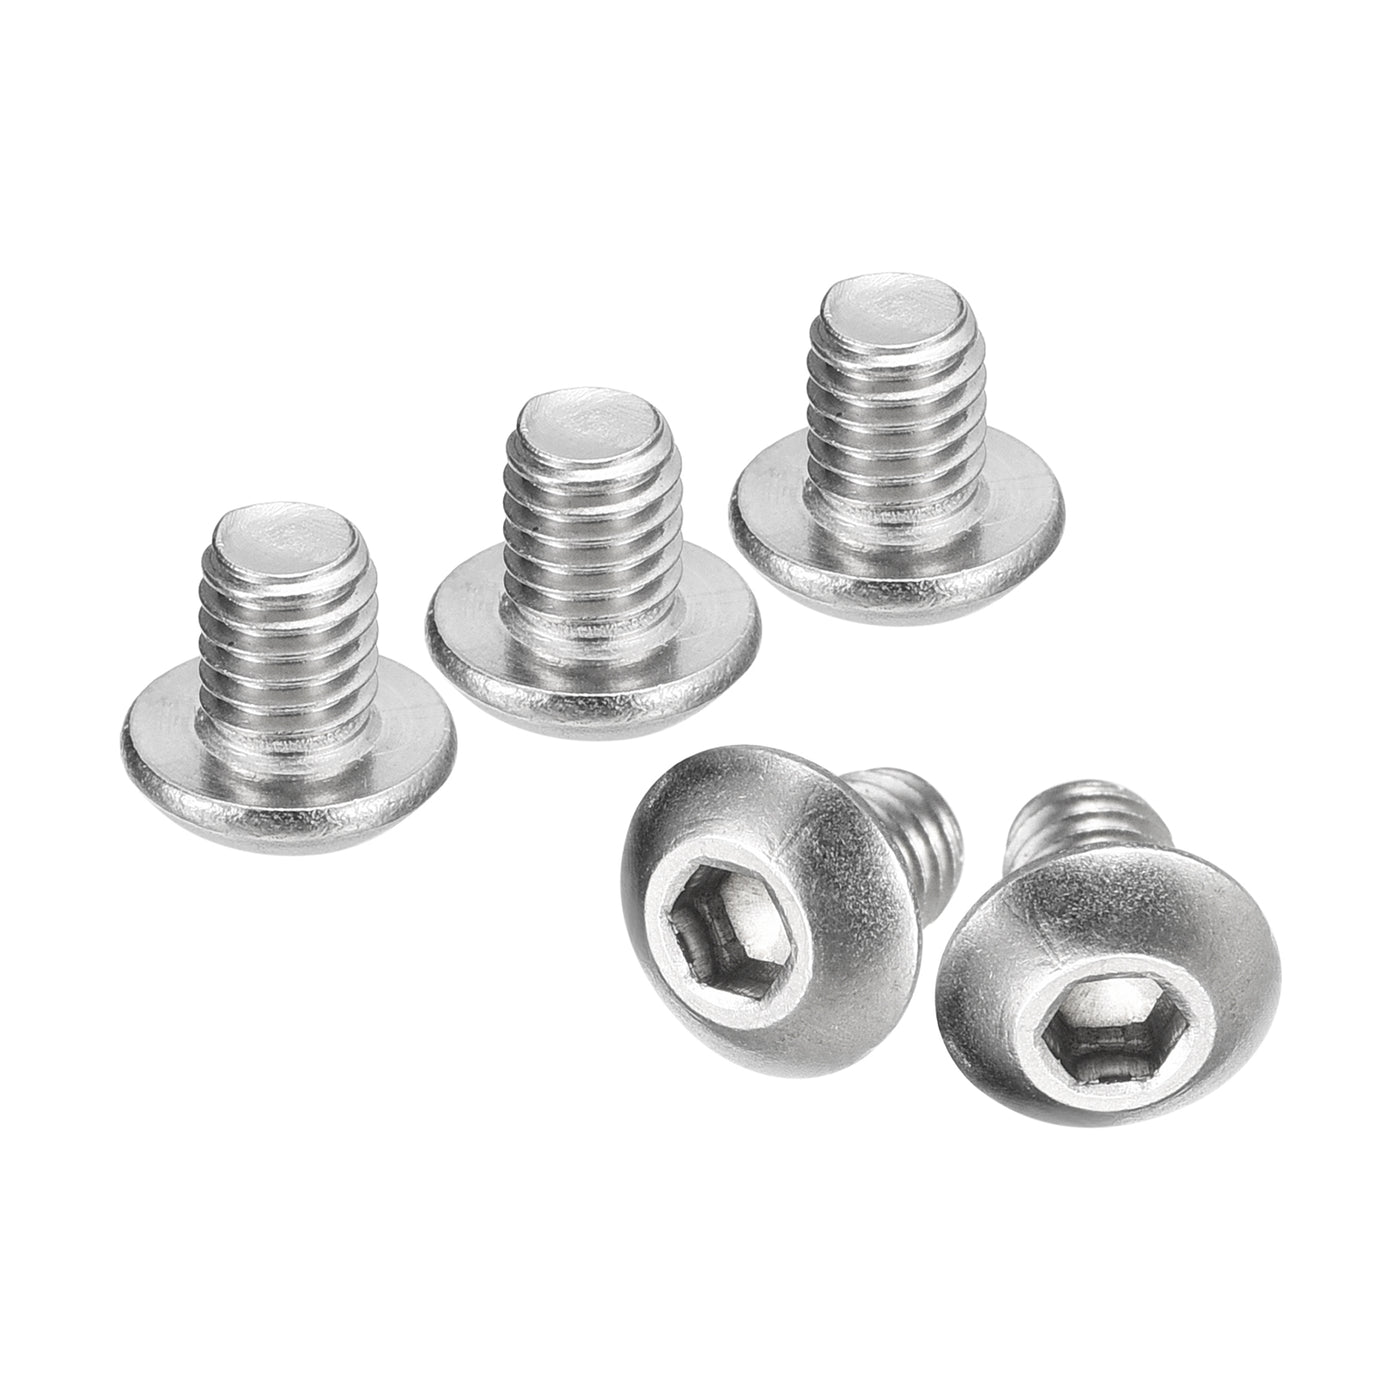 uxcell Uxcell #10-32x1/4" Button Head Socket Cap Screws, 20pcs 304 Stainless Steel Screws